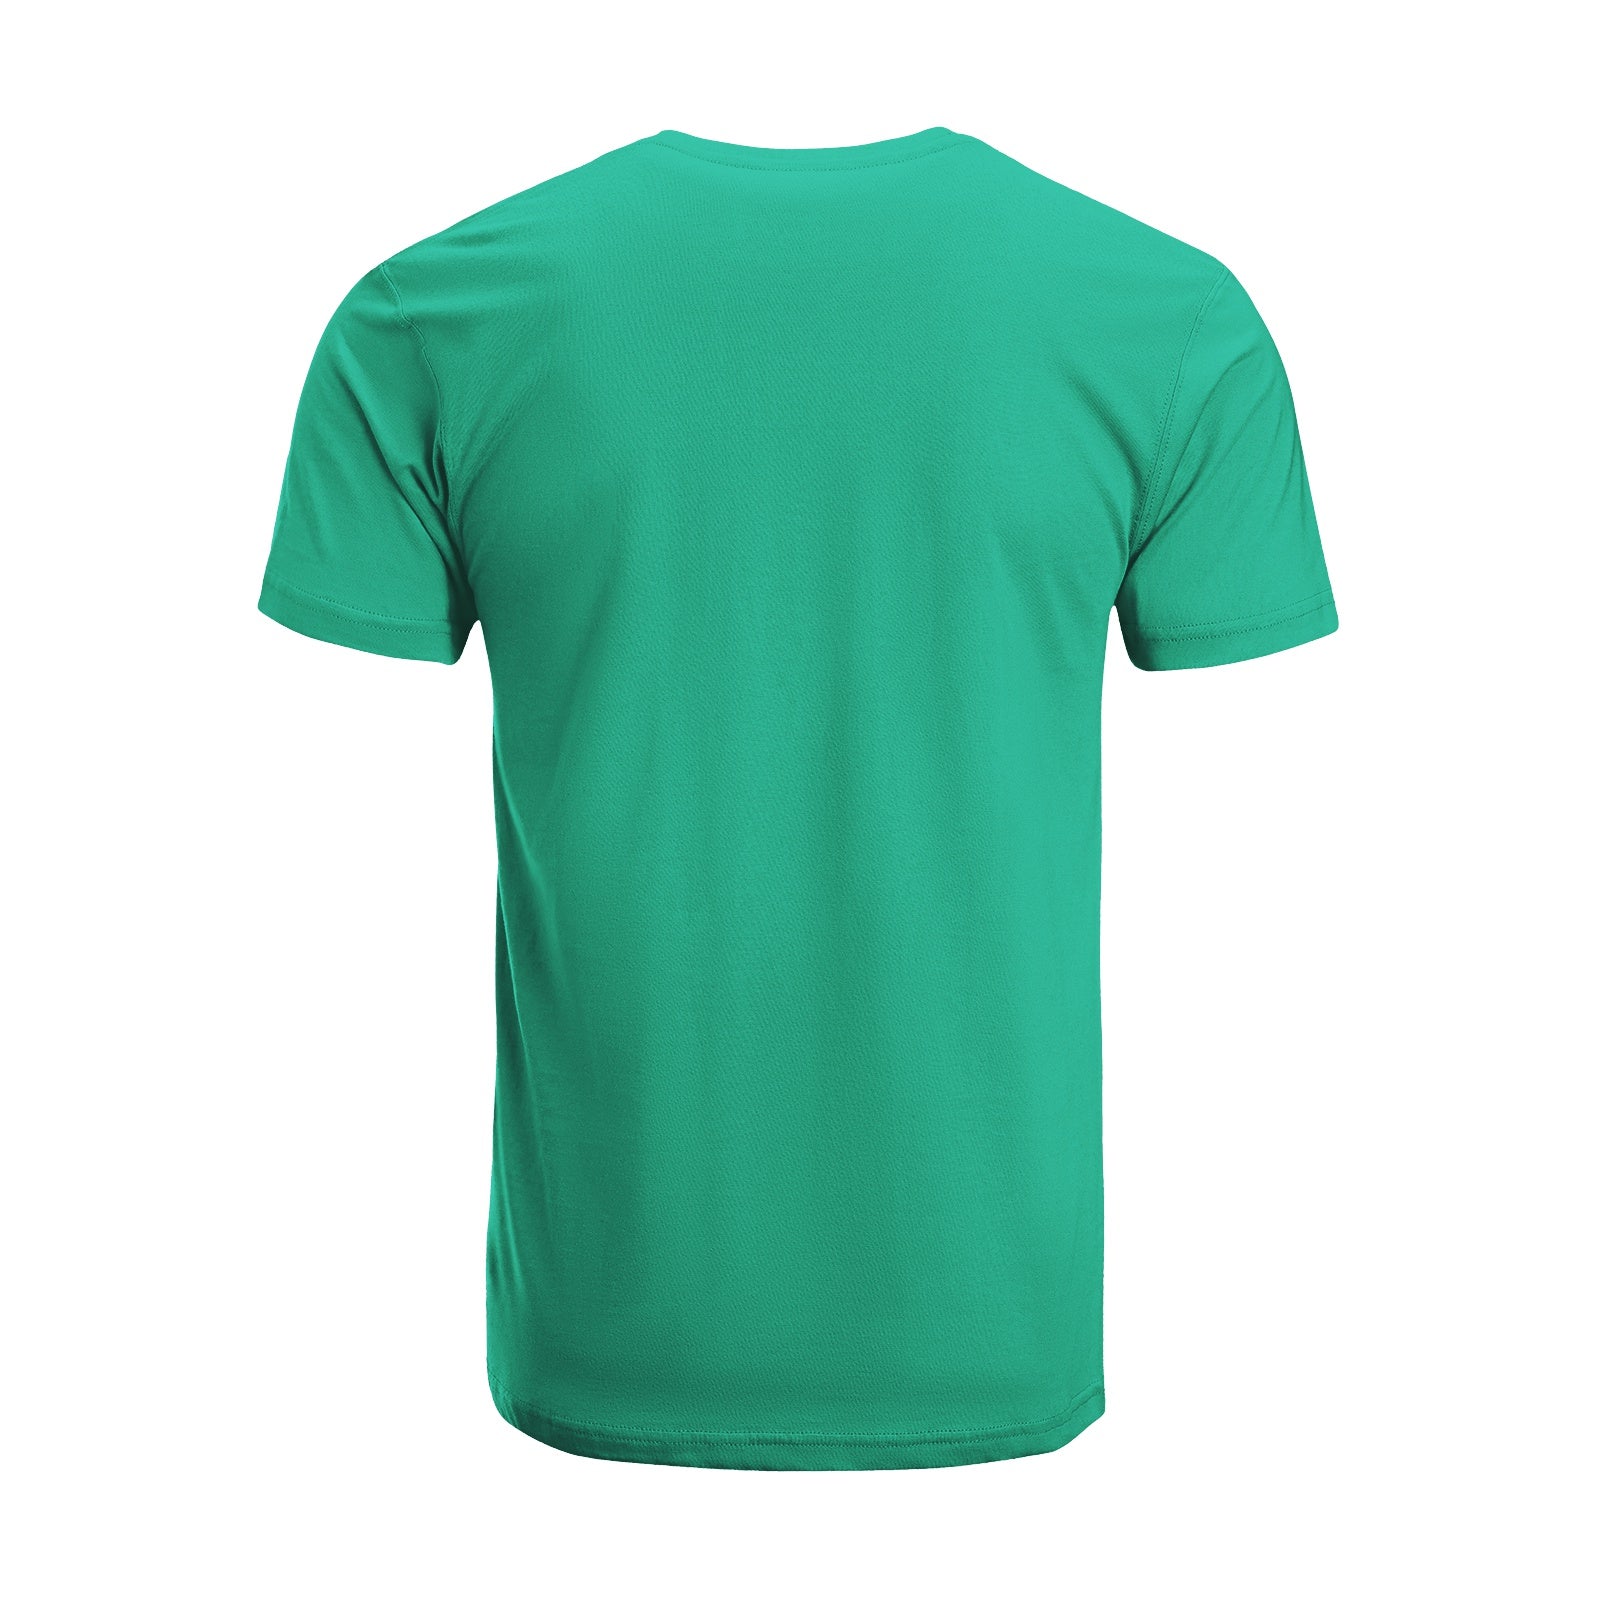 Unisex Short Sleeve Crew Neck Cotton Jersey T-Shirt CAT 47 - Tara-Outfits.com